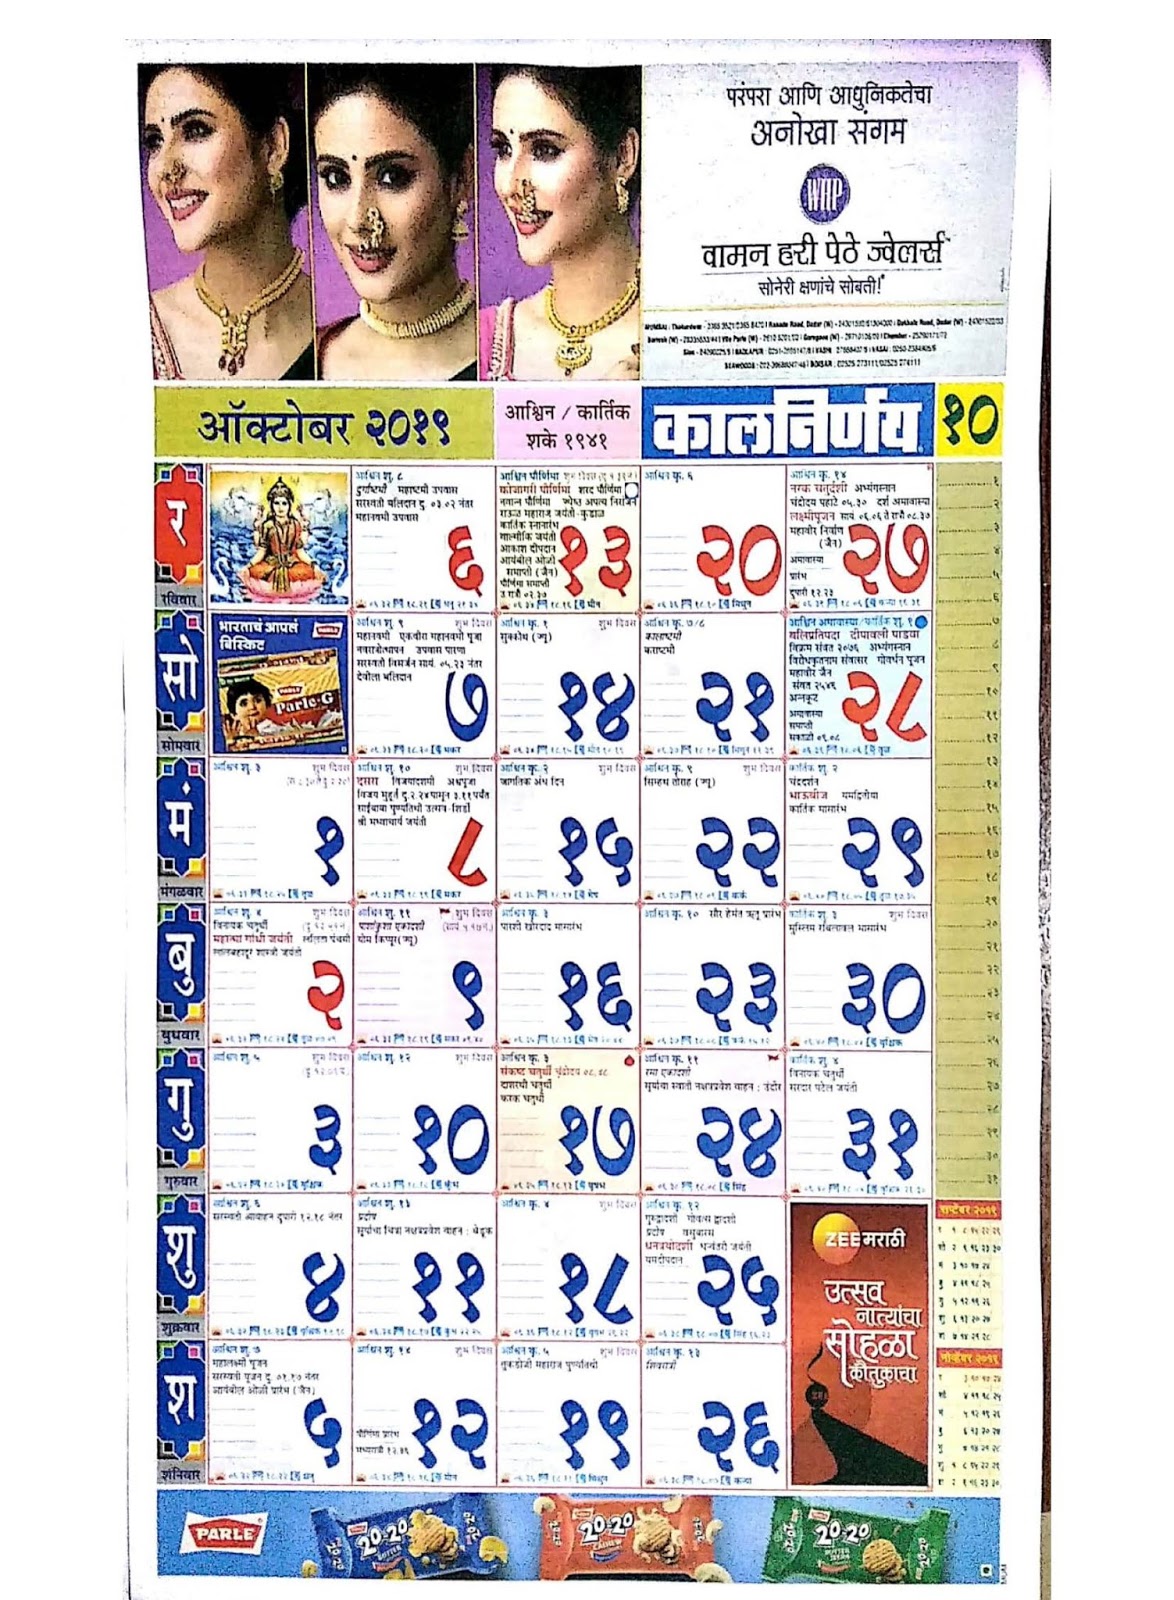 marathi-kalnirnay-calendar-2019-marathi-calendar-pdf-free